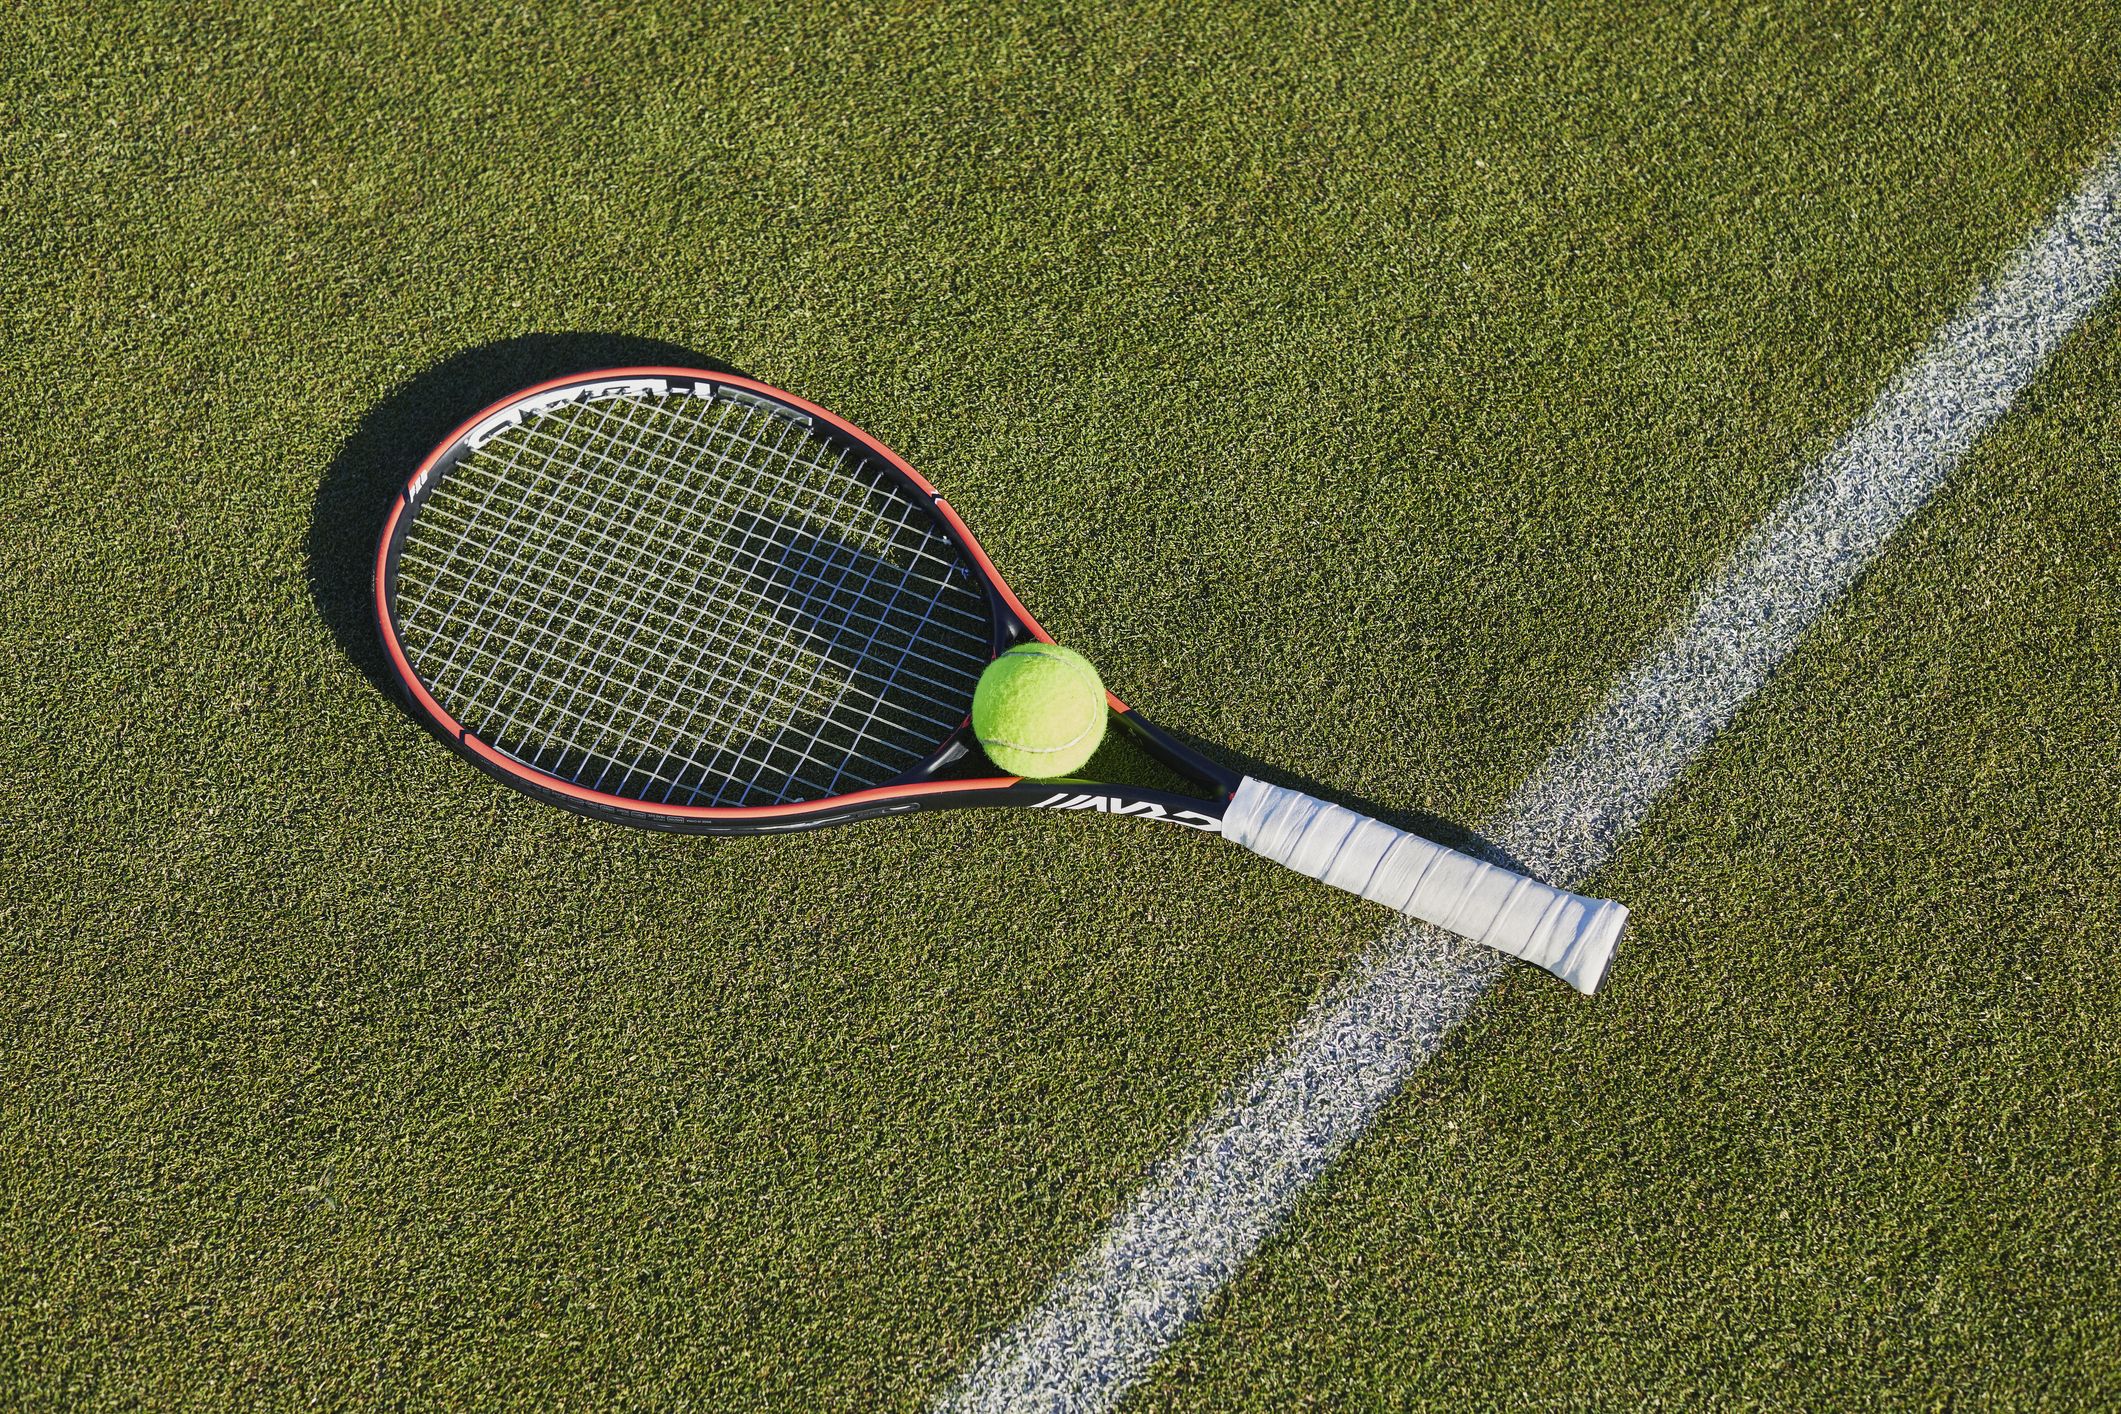 9 Best Tennis Rackets for Beginners to Buy in 2023